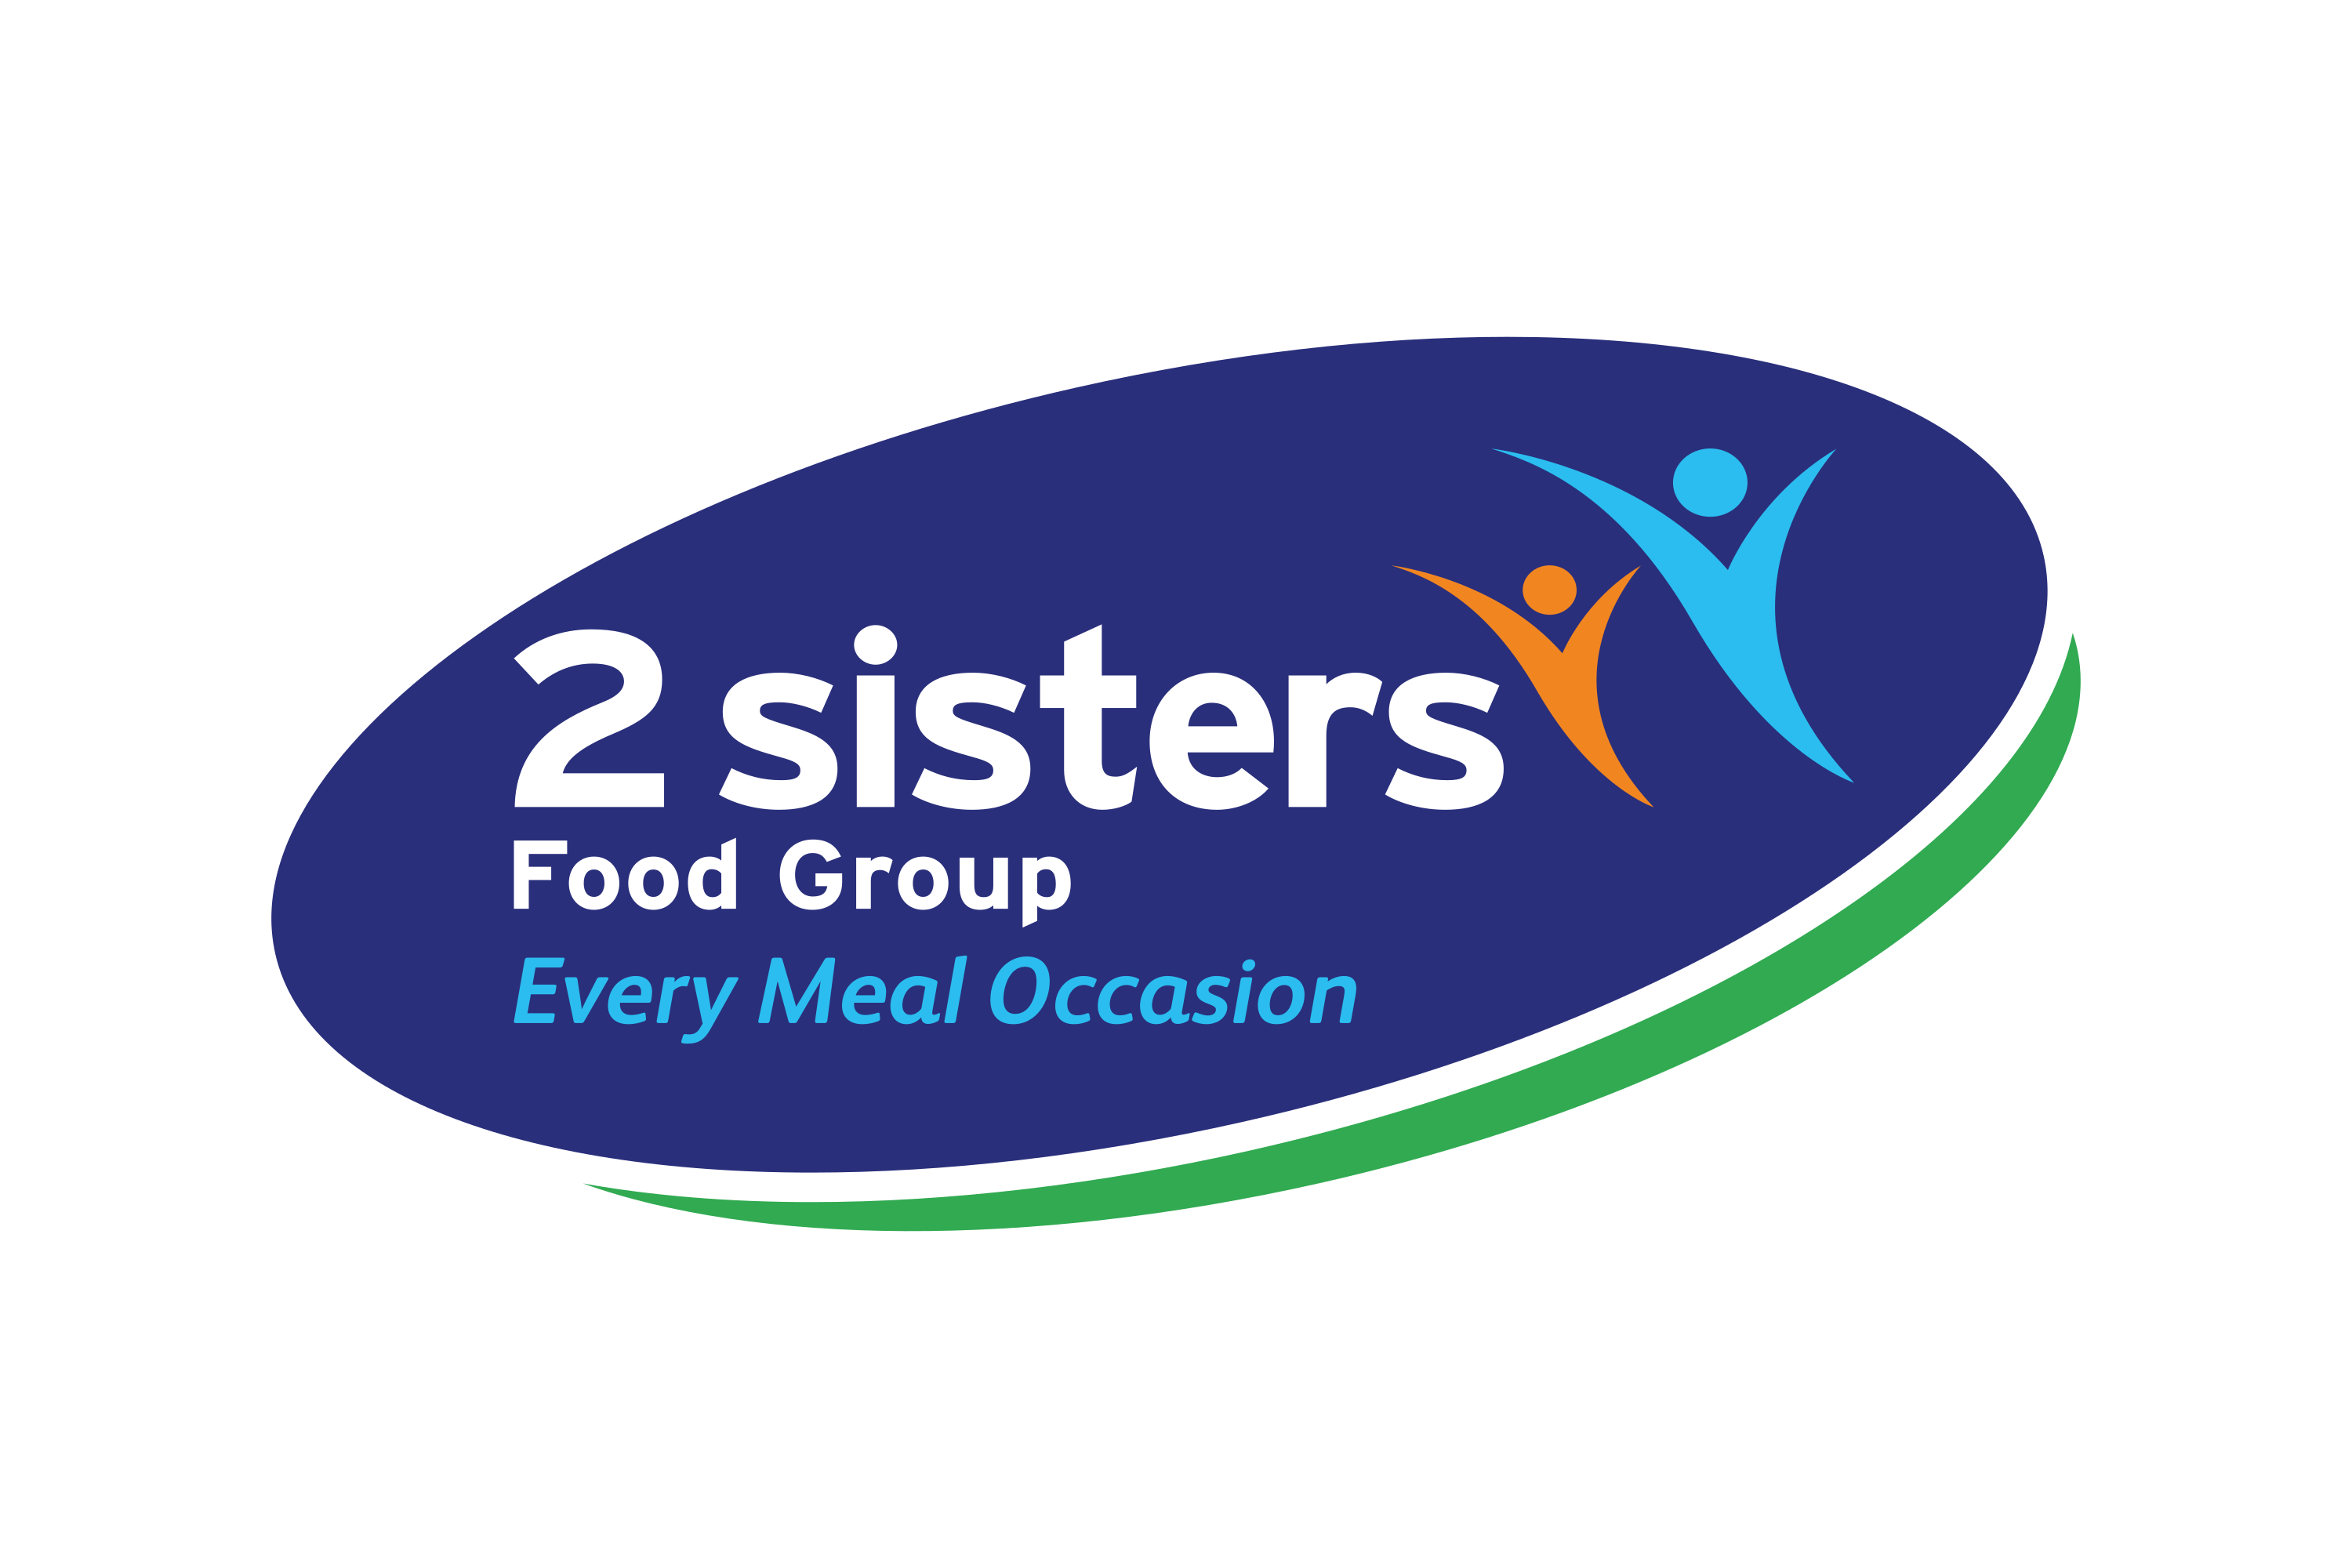 2 Sisters Food Group Logo